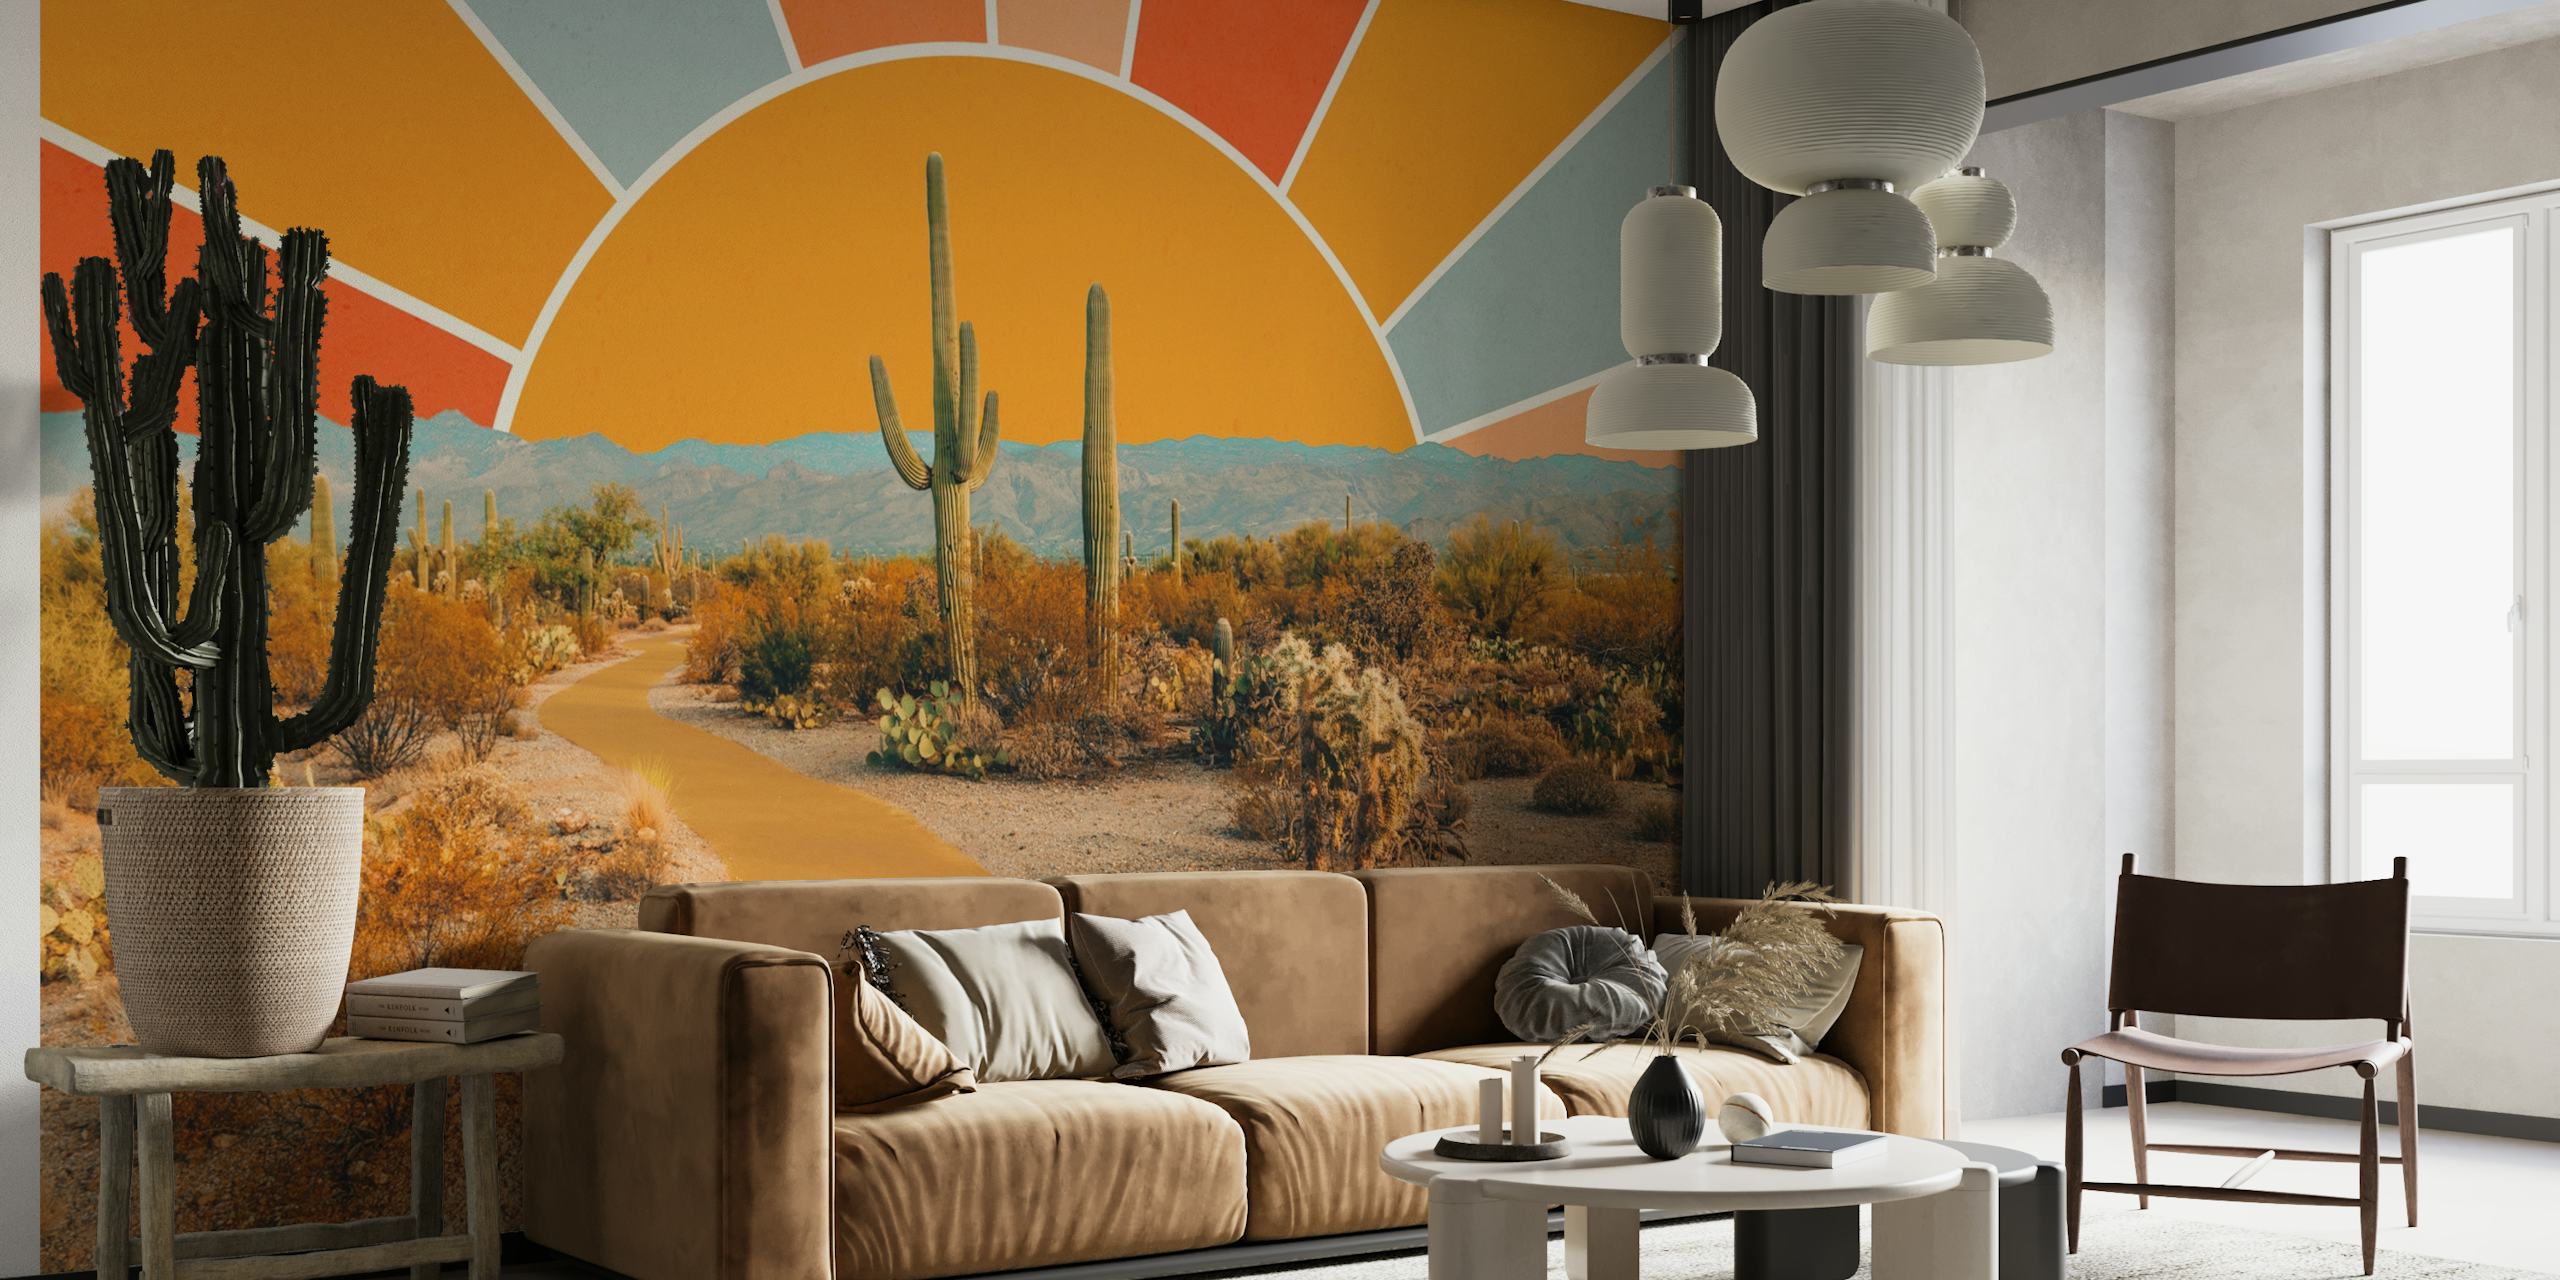 Artistic desert scene wall mural with cacti and warm sunburst design